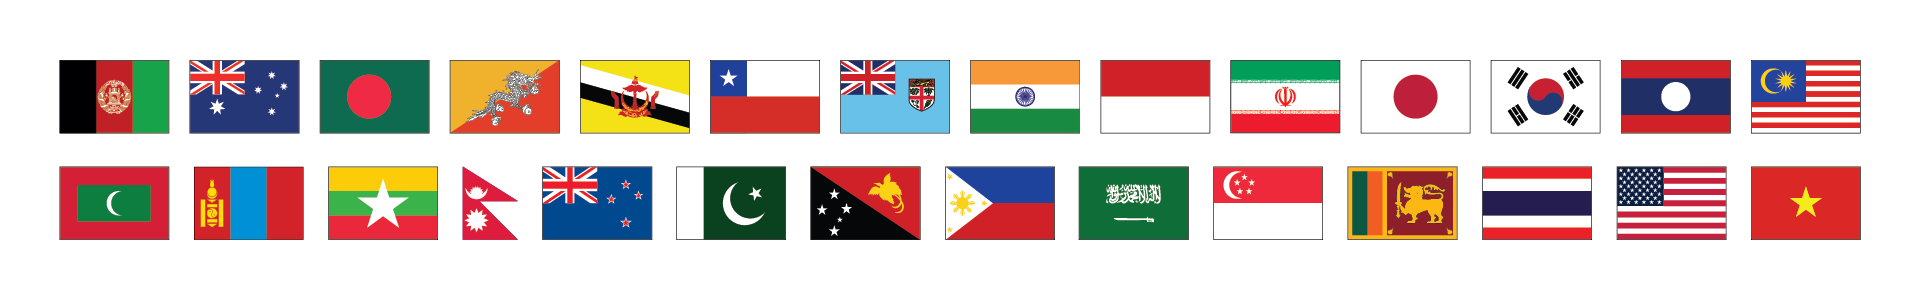 28 Member Countries Flags-02